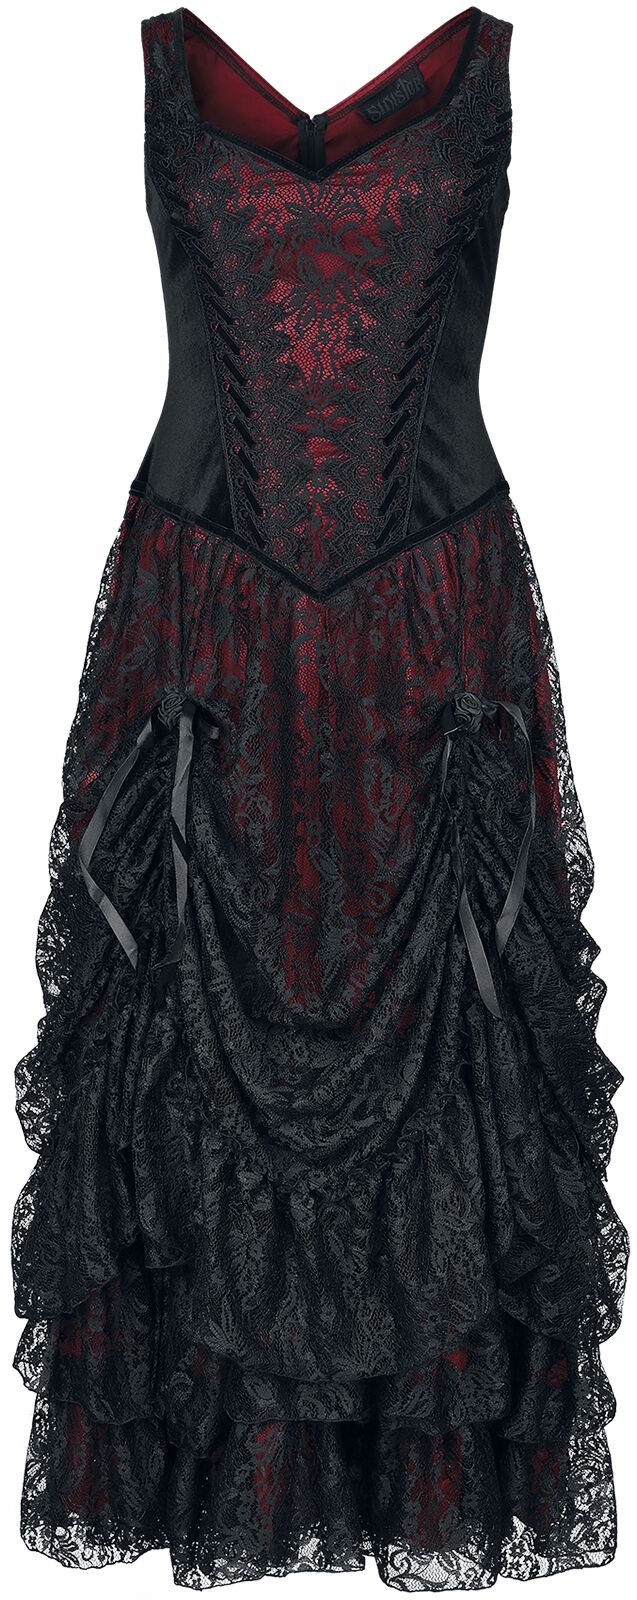 Sinister Gothic Longdress Langes Kleid schwarz rot in 4XL